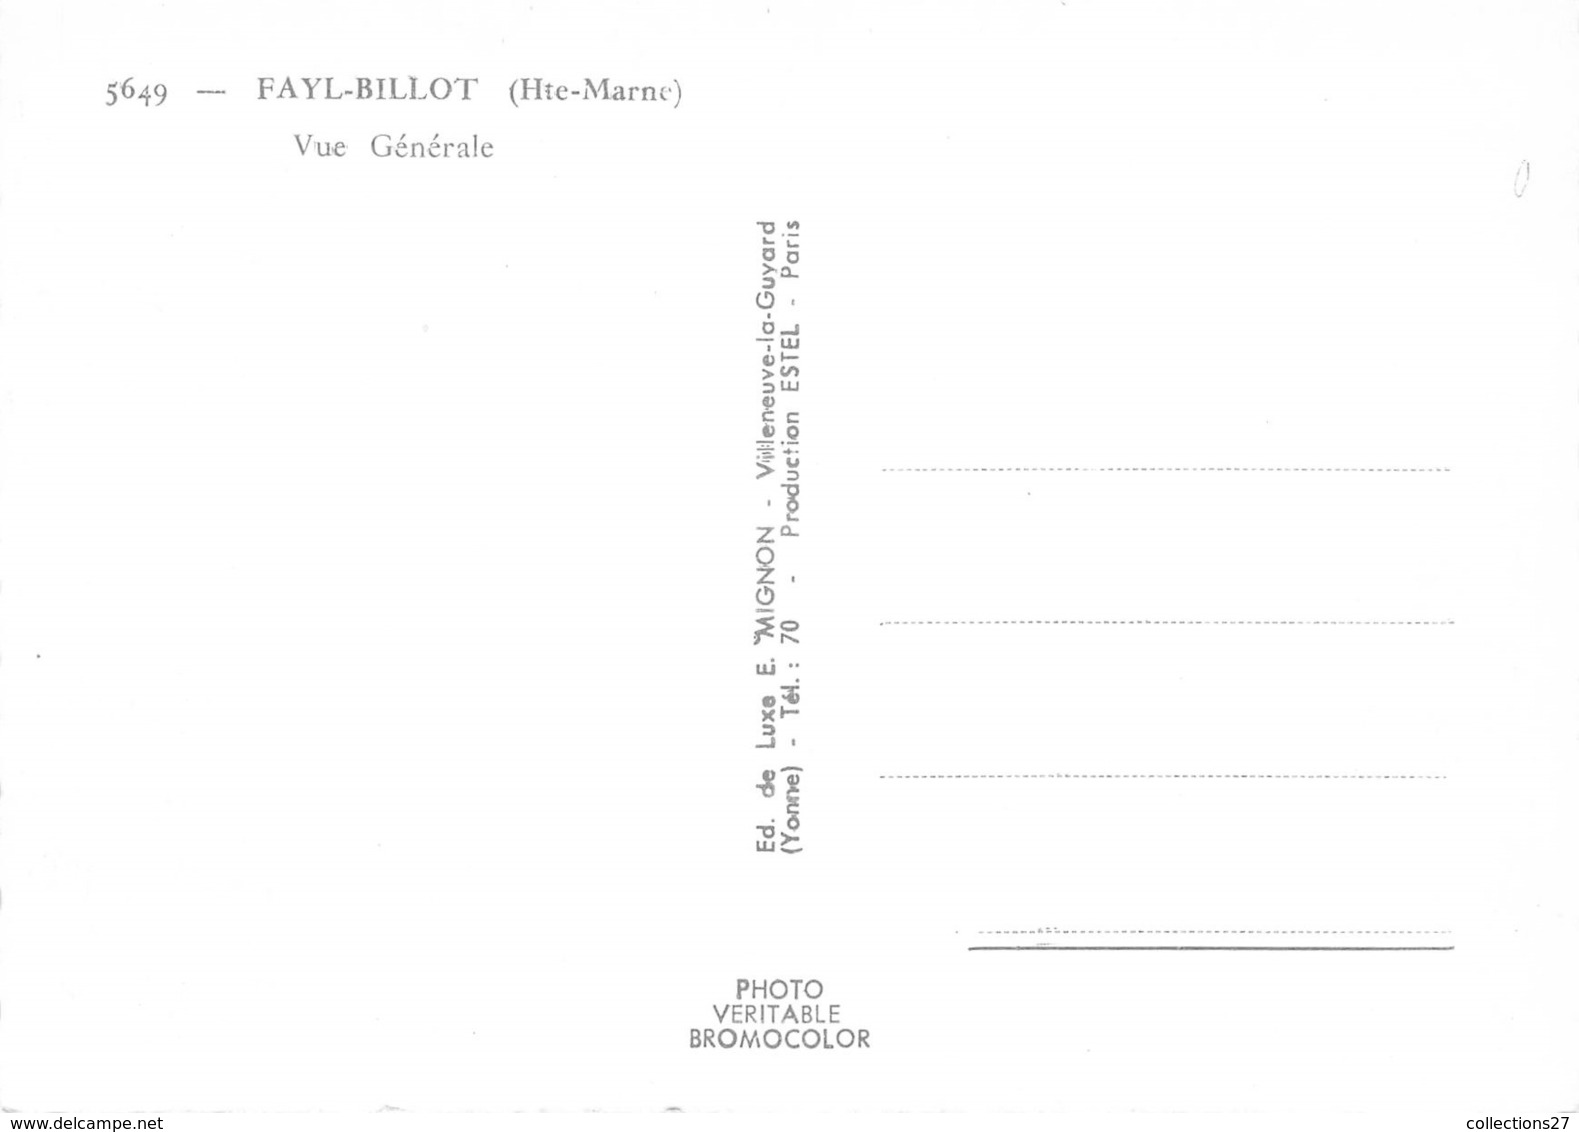 52-FAYL-BILLOT- VUE GENERALE - Fayl-Billot